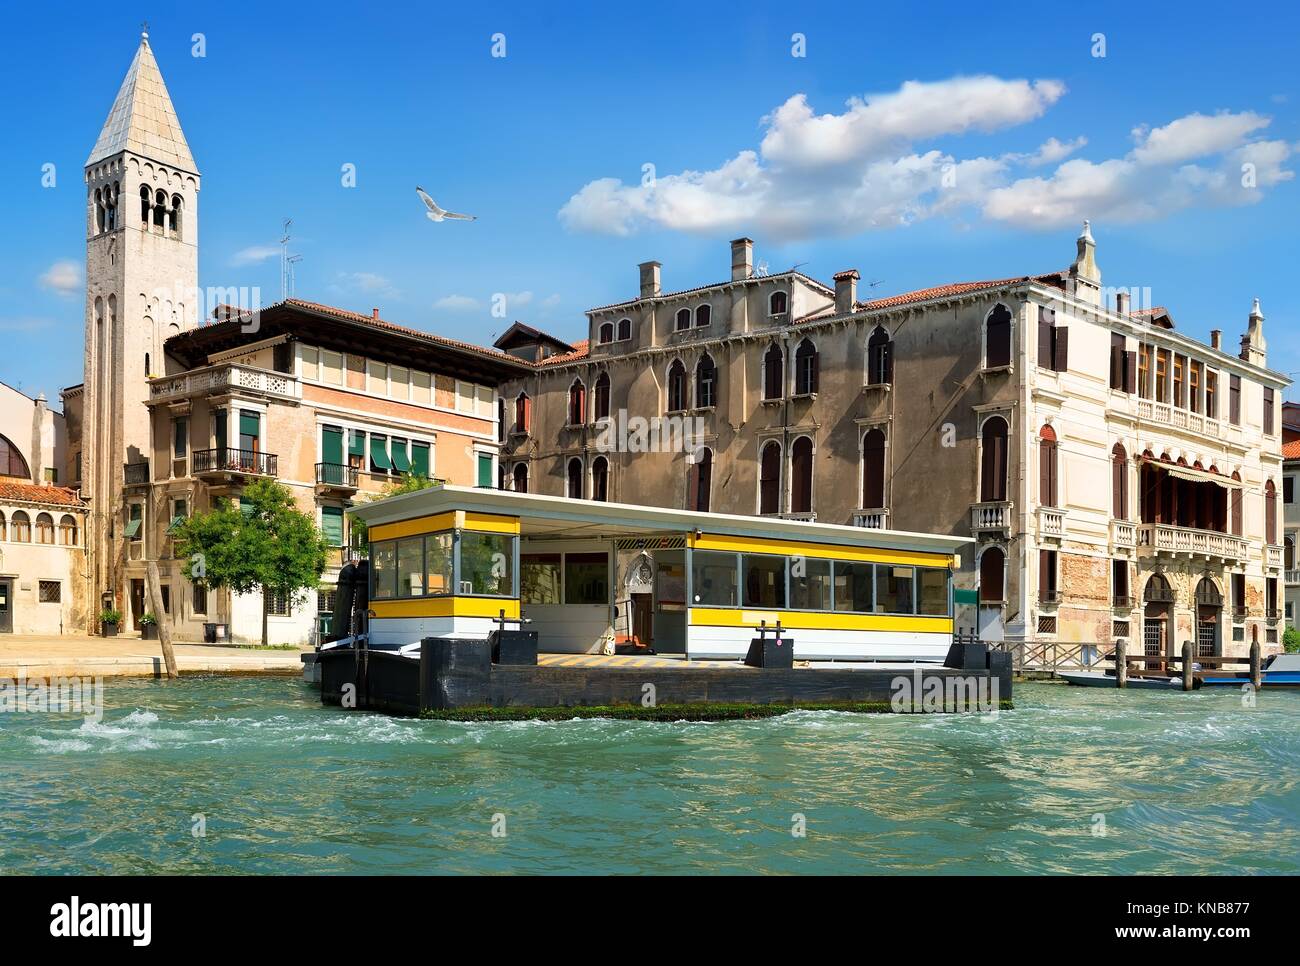 Vaporetto Stop in Venedig in der Nähe von alten Gebäuden, Italien. Stockfoto